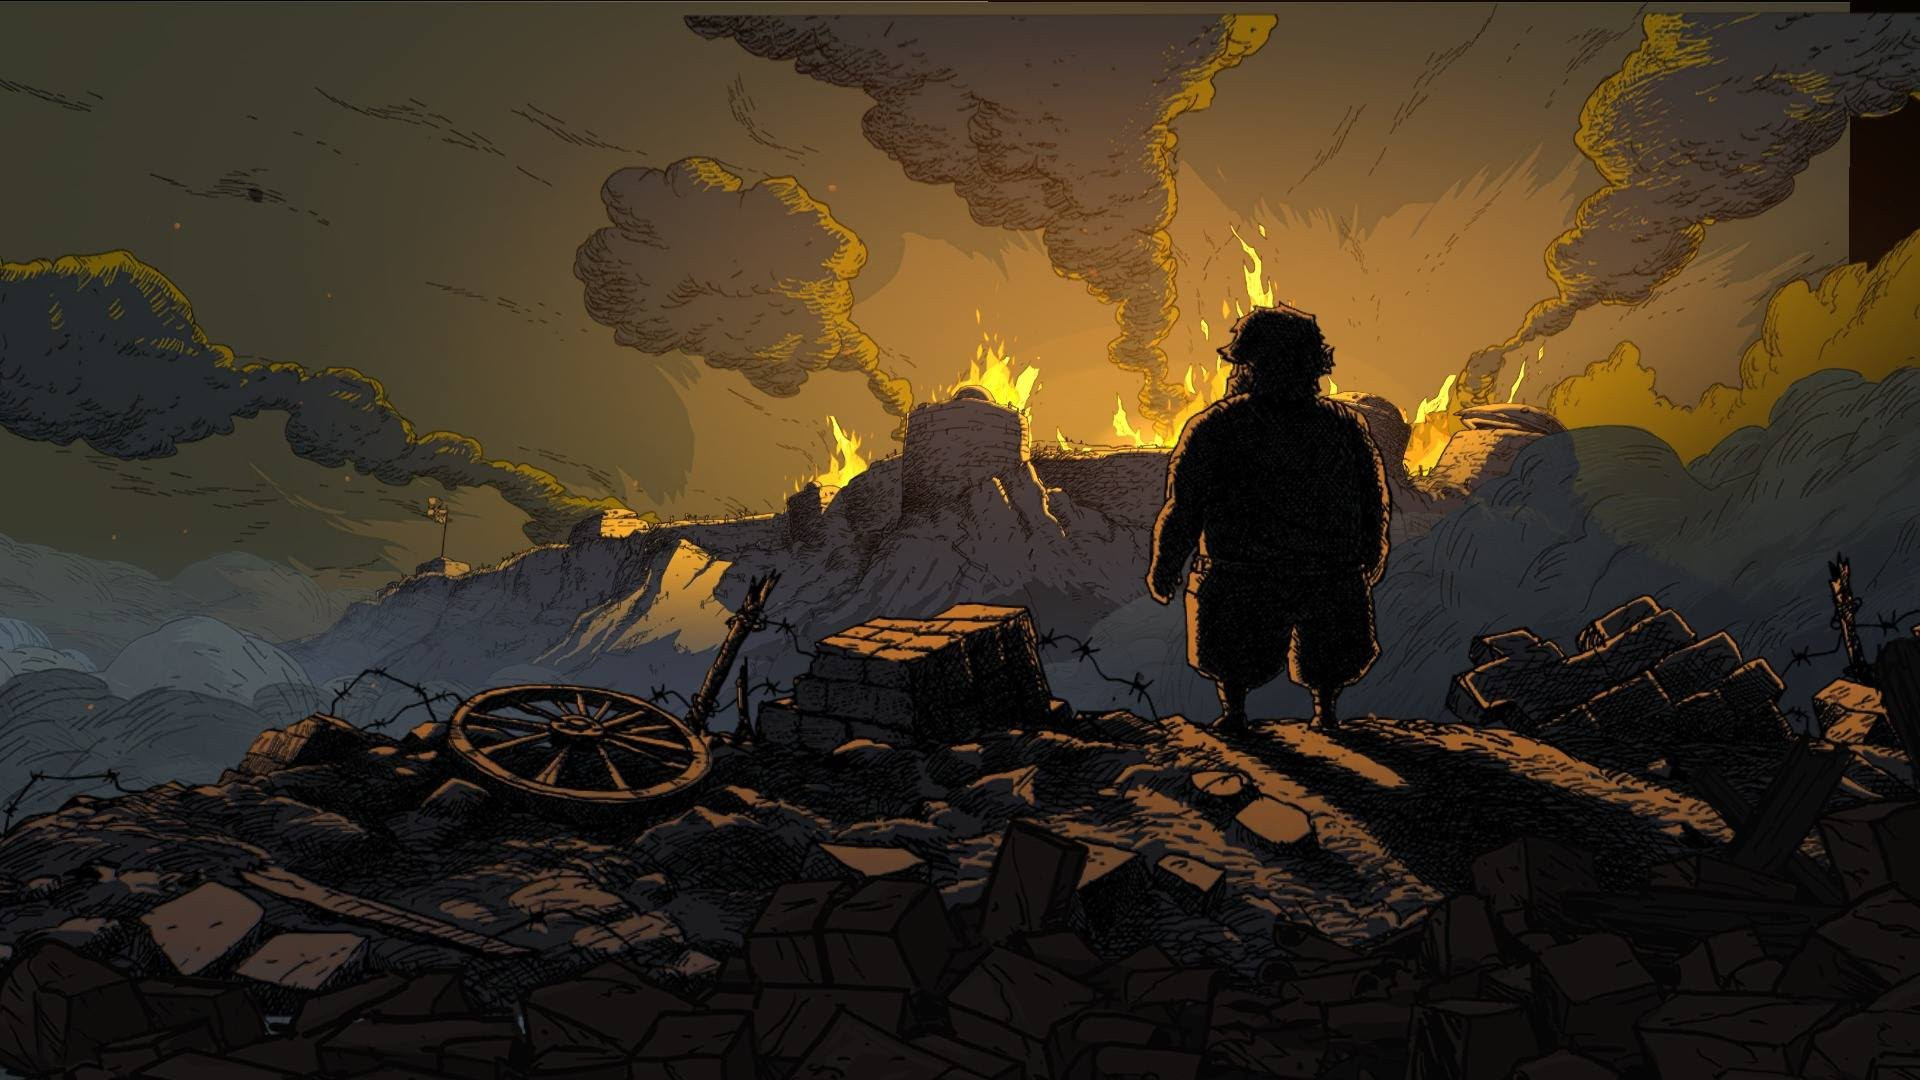 Скриншот из&nbsp;игры “Valiant Hearts: The Great War”&nbsp;— 2014&nbsp;год.